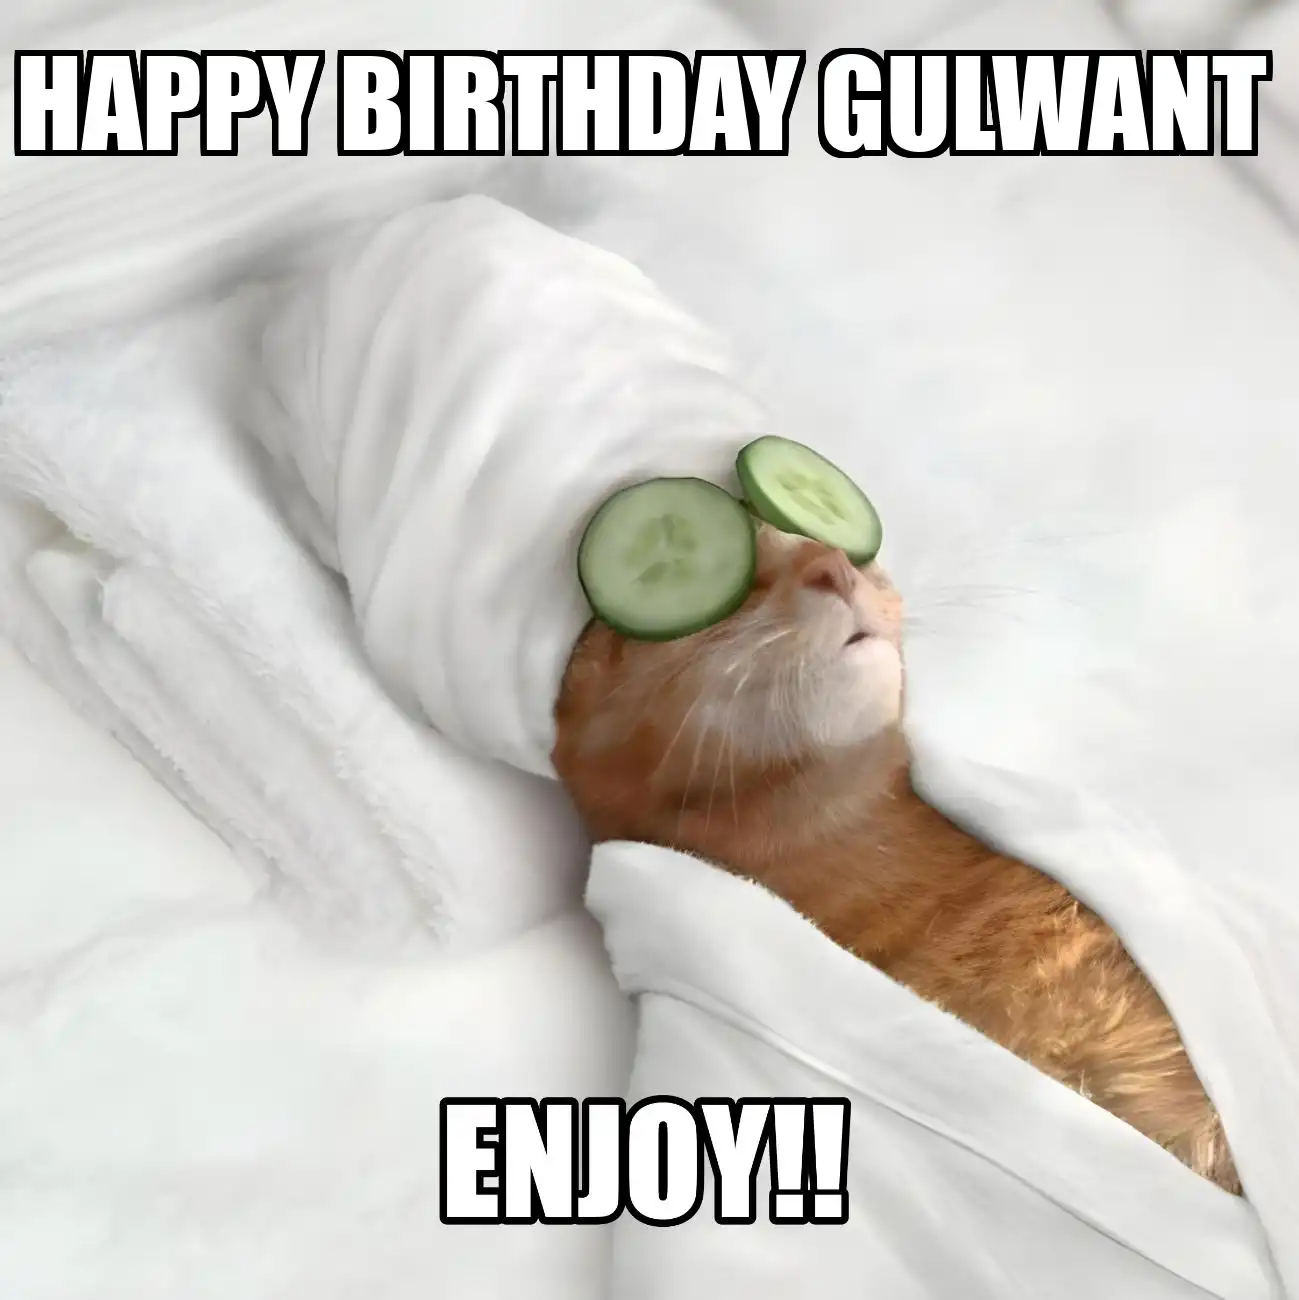 Happy Birthday Gulwant Enjoy Cat Meme